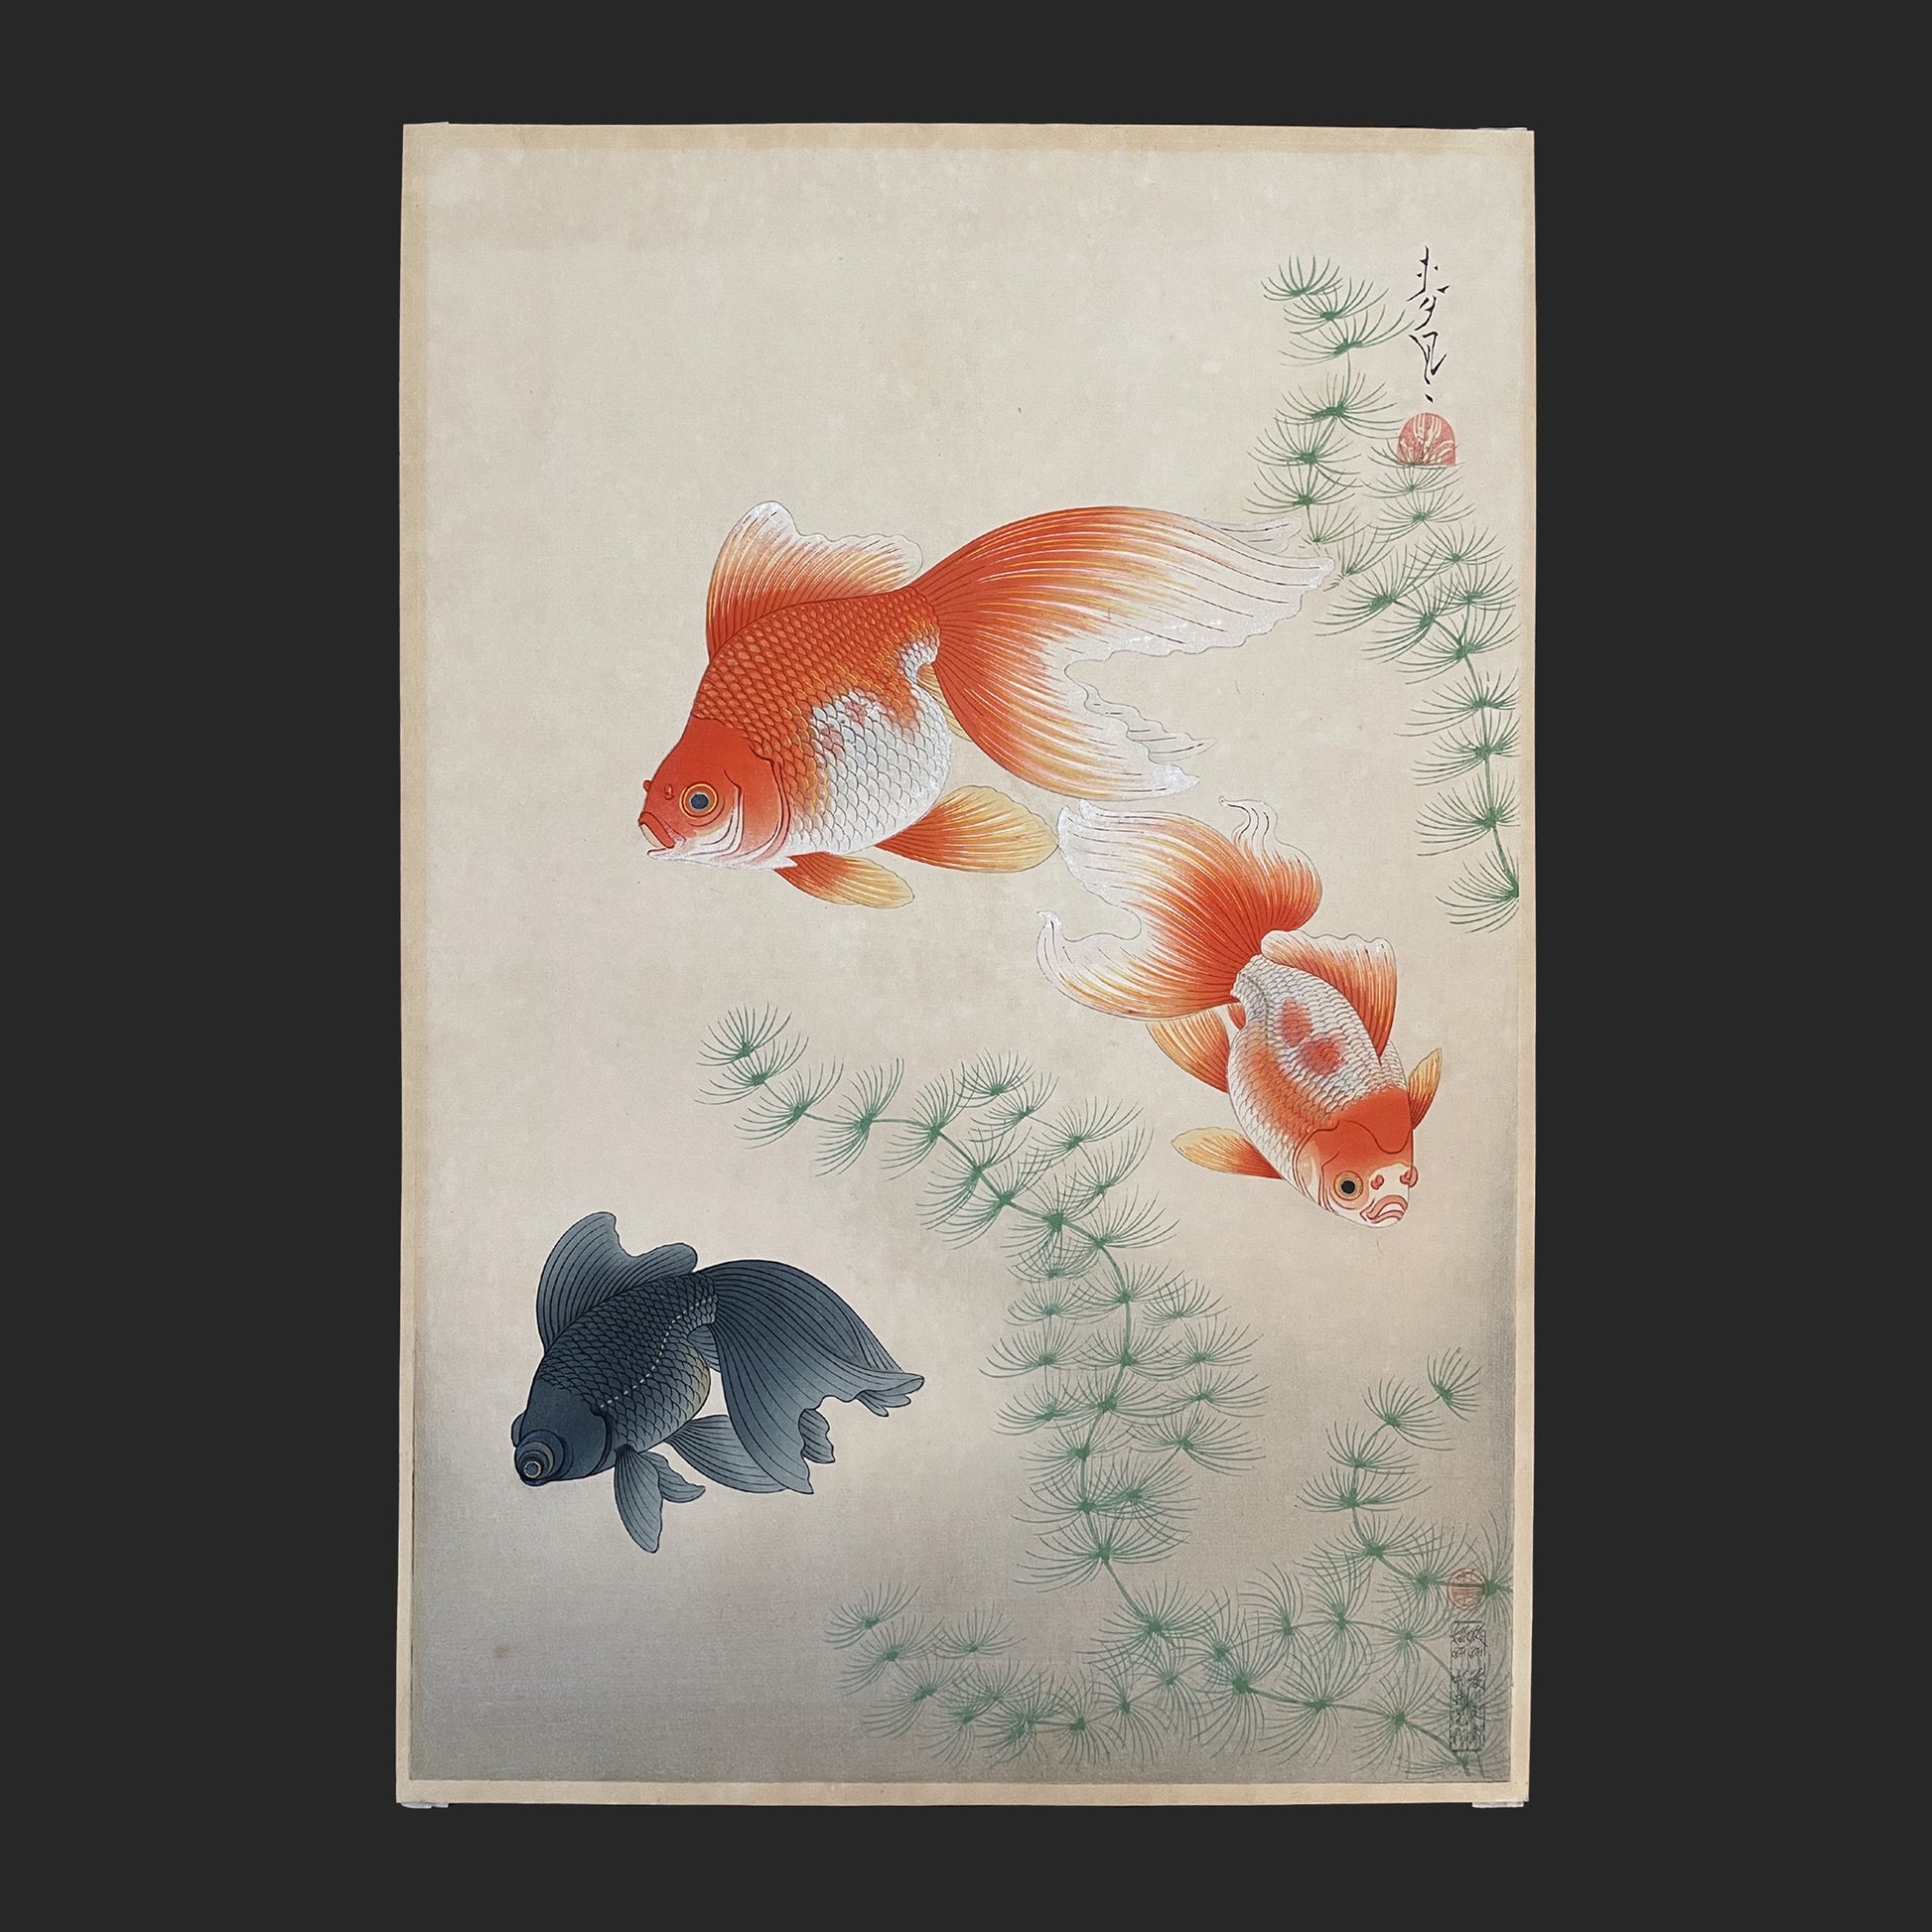 大野 麦風 ONO Bakufu 大日本魚類画集より「金魚」